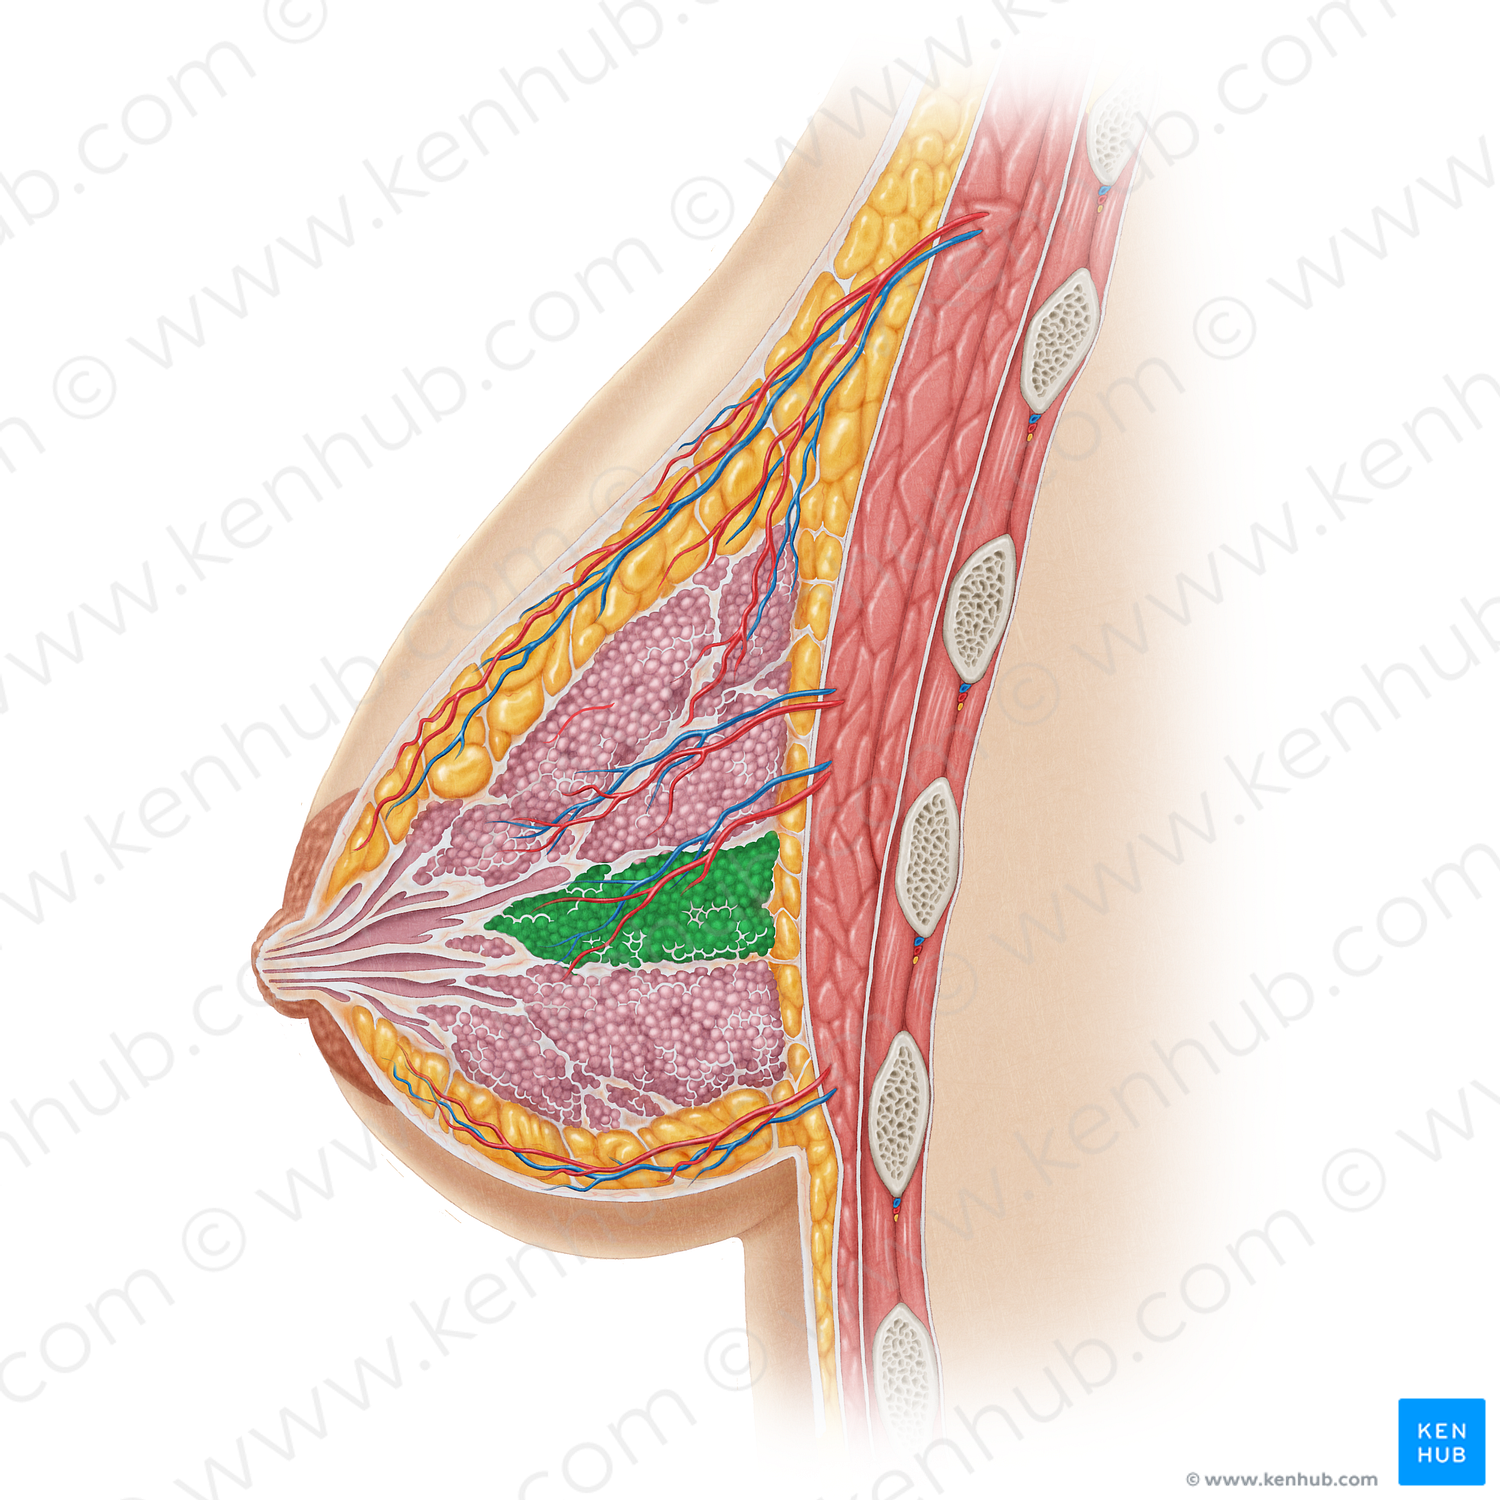 Lobe of mammary gland (#19657)